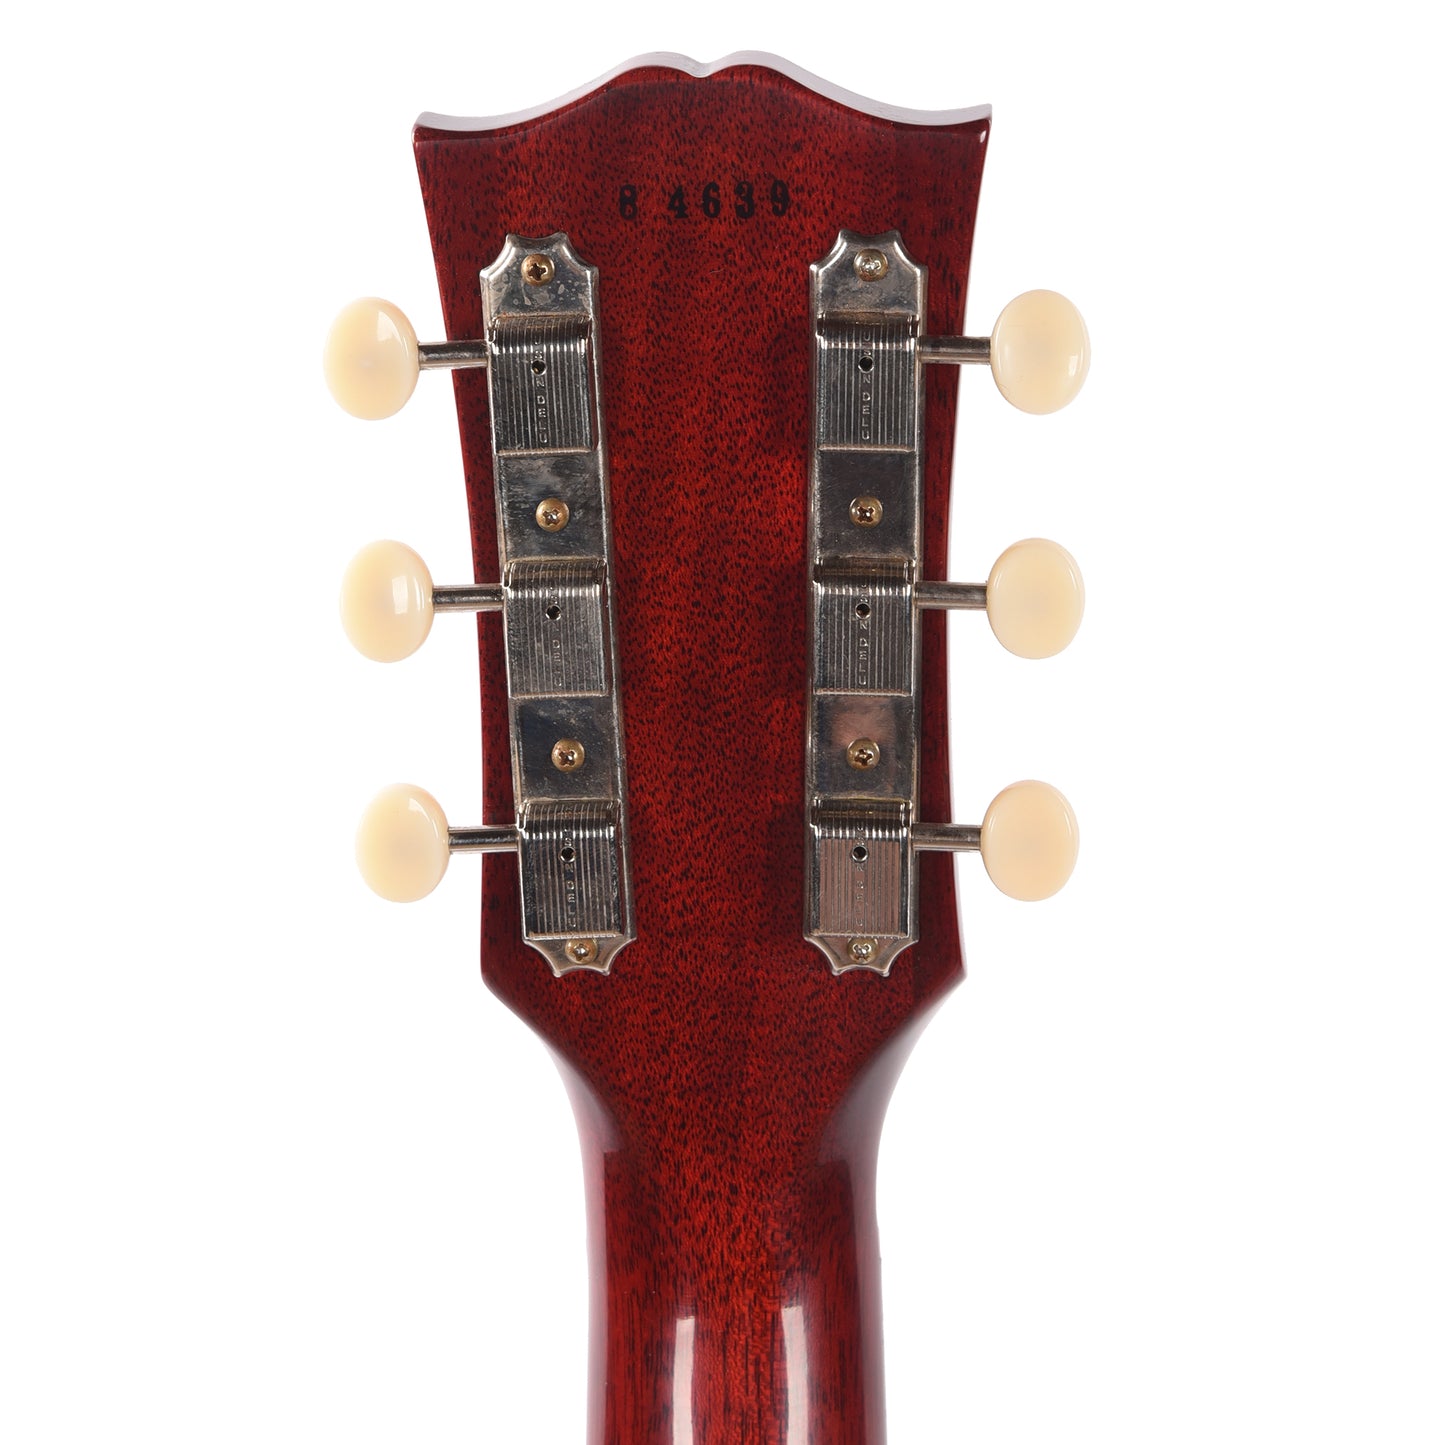 Gibson Custom Shop 1958 Les Paul Junior Double Cut Reissue Cherry Red VOS